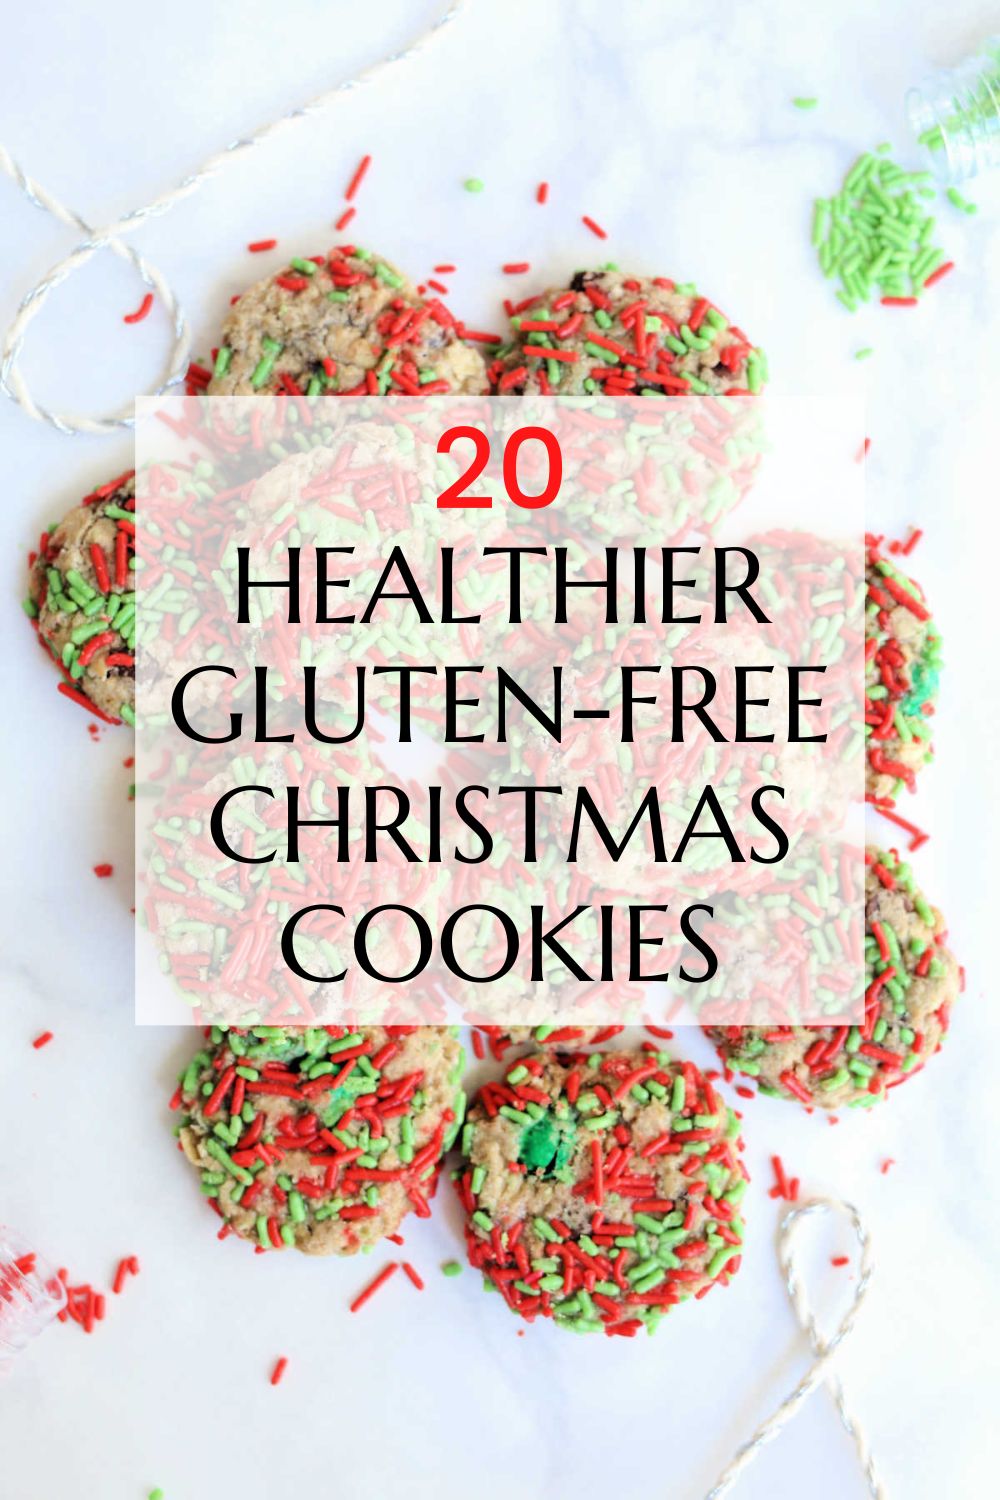 20 healthy gluten-free Christmas Cookies